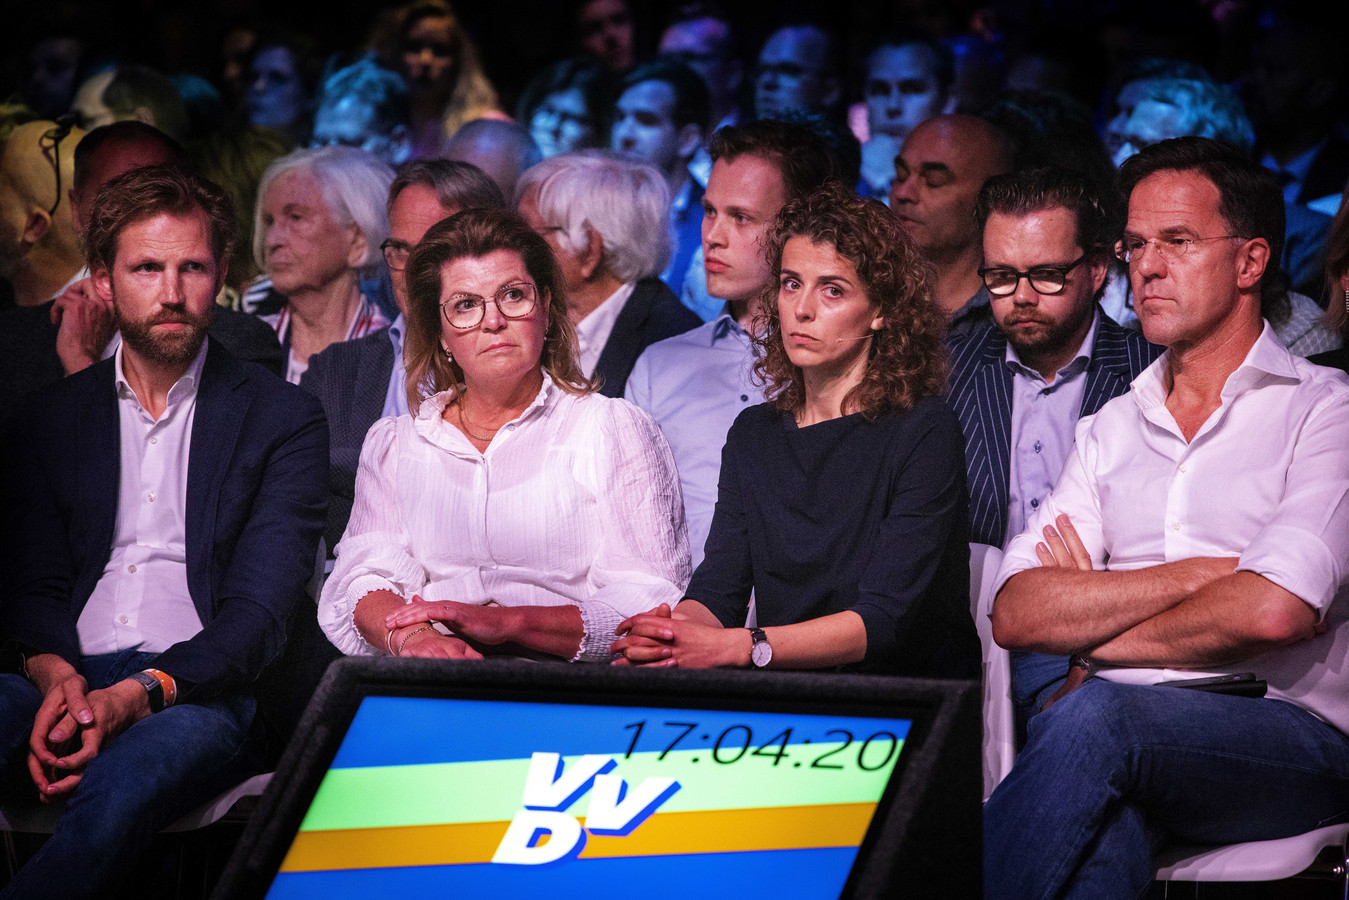 Dennis Wiersma, Christianne van der Wal, Sophie Hermans en Mark Rutte tijdens de algemene ledenvergadering van de VVD.